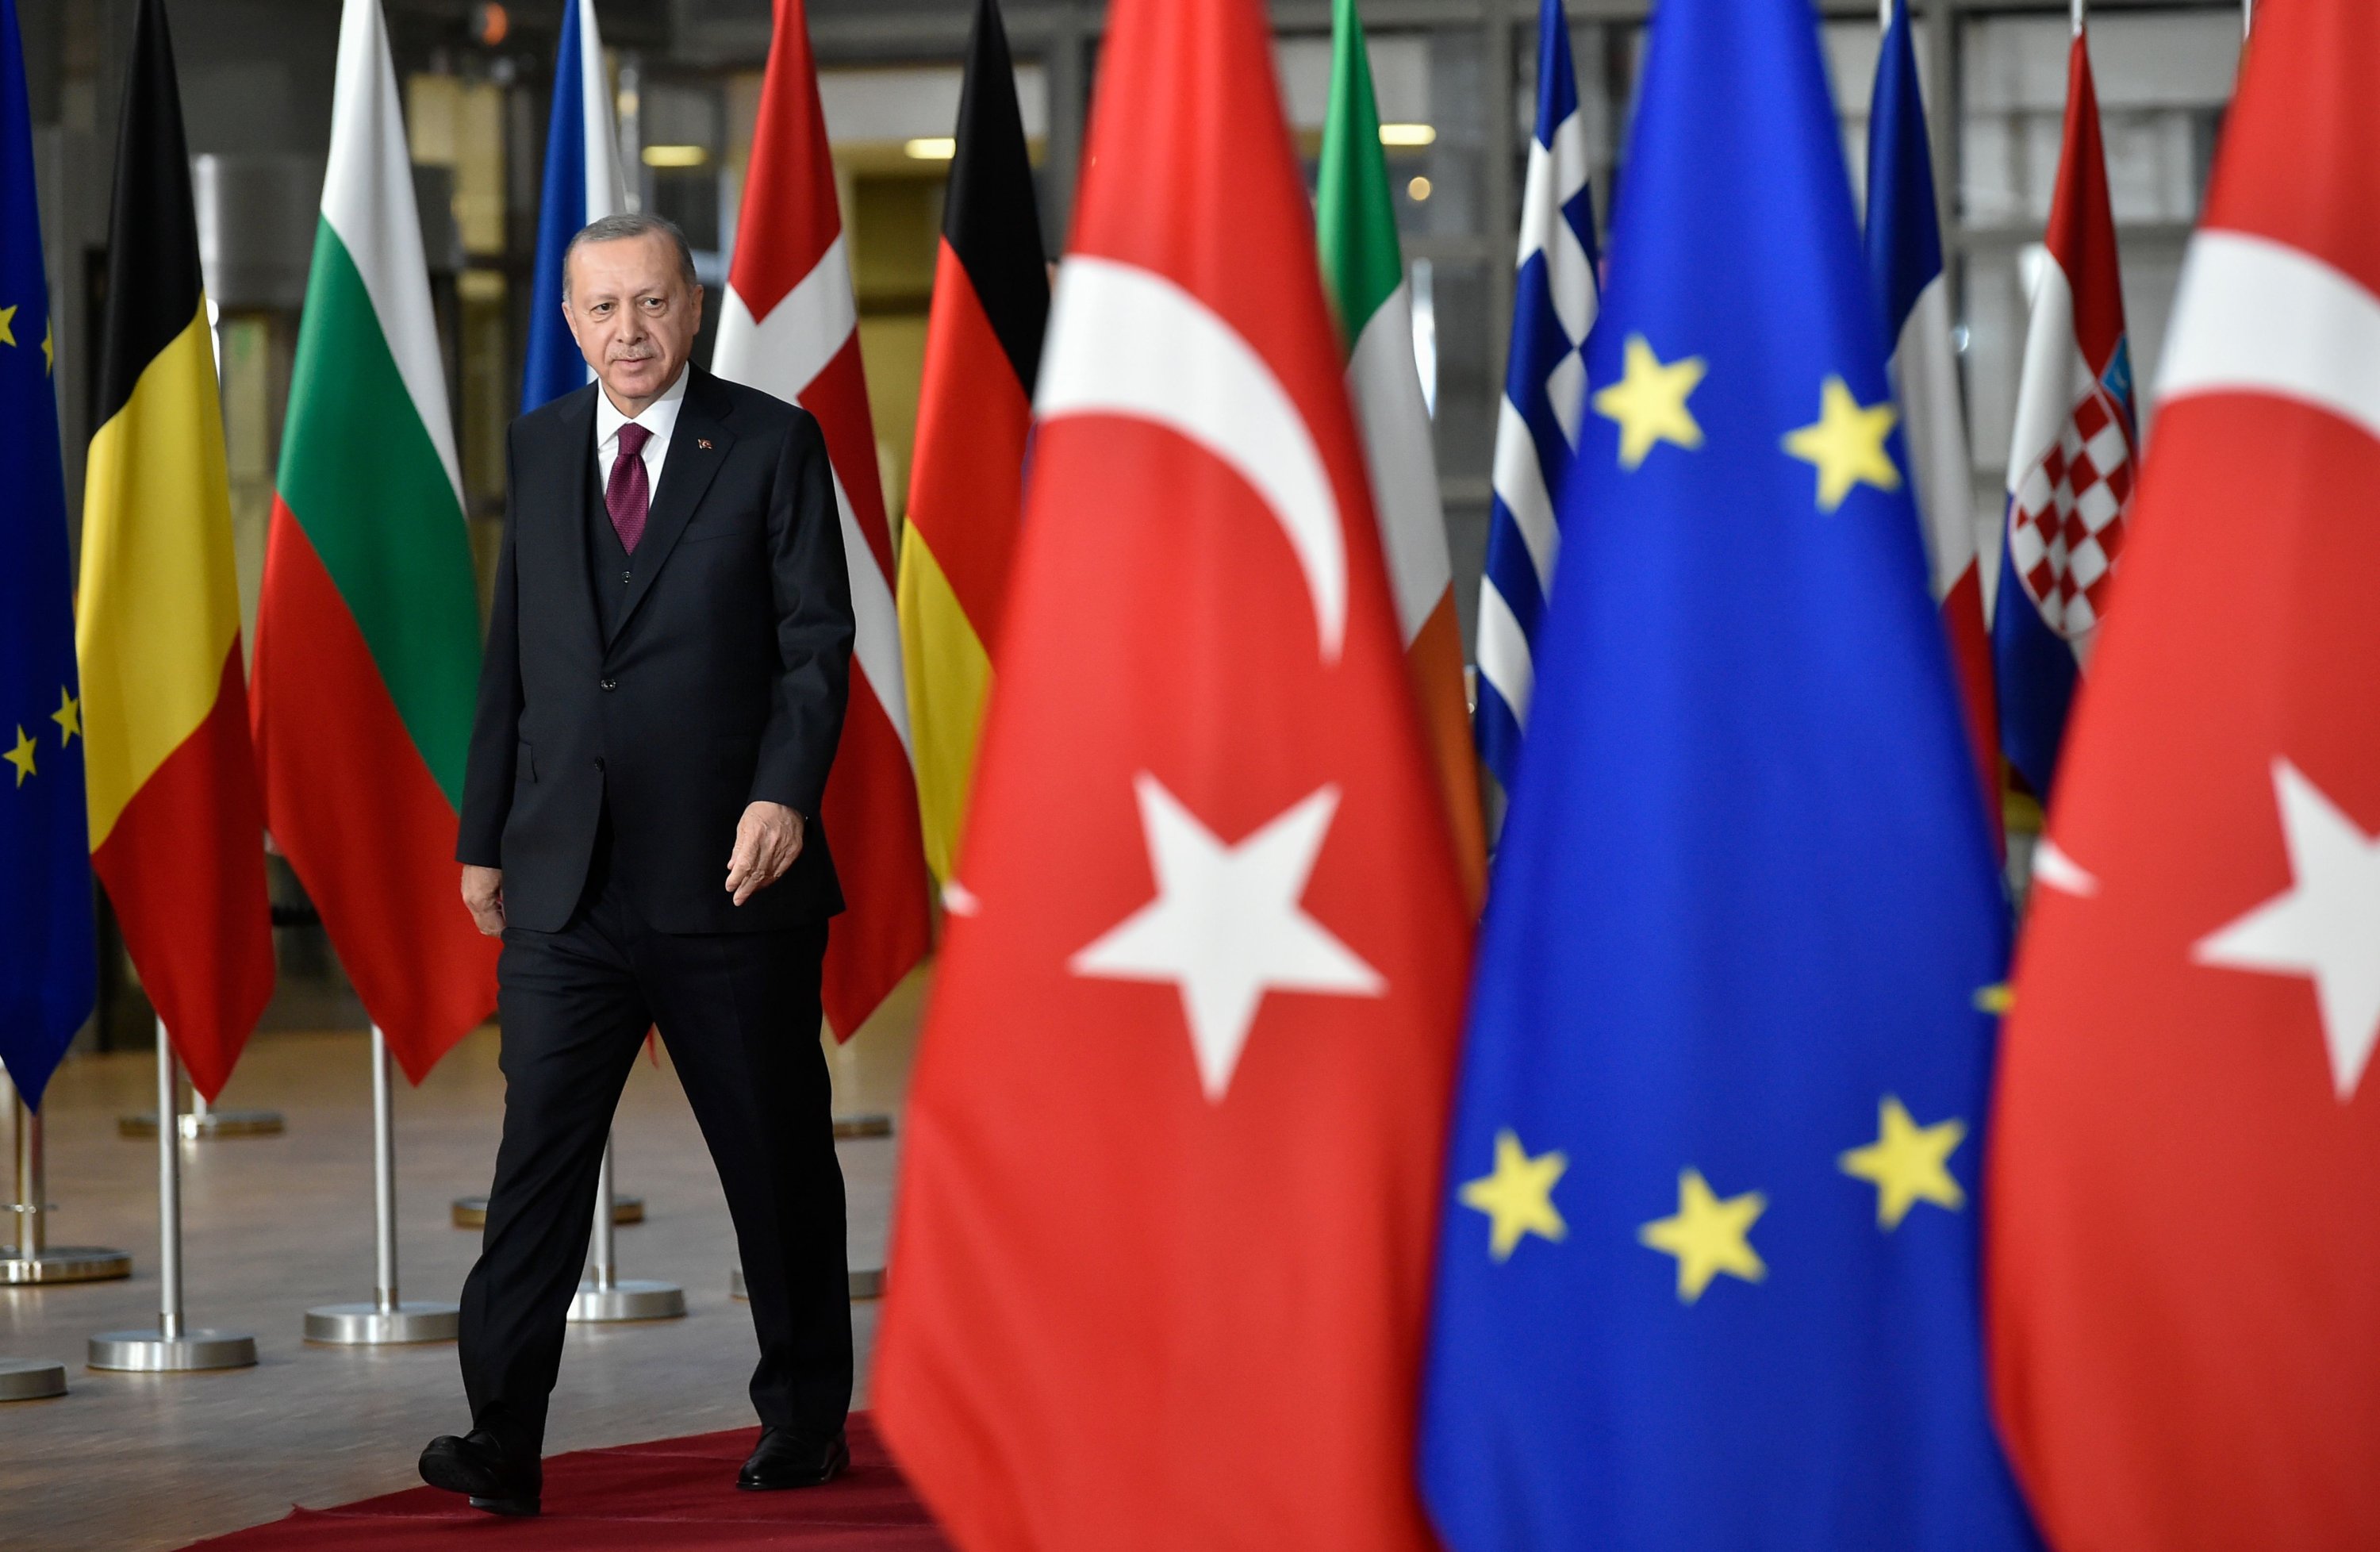 Türkiye-EU Relations in Changing Geopolitical Parameters